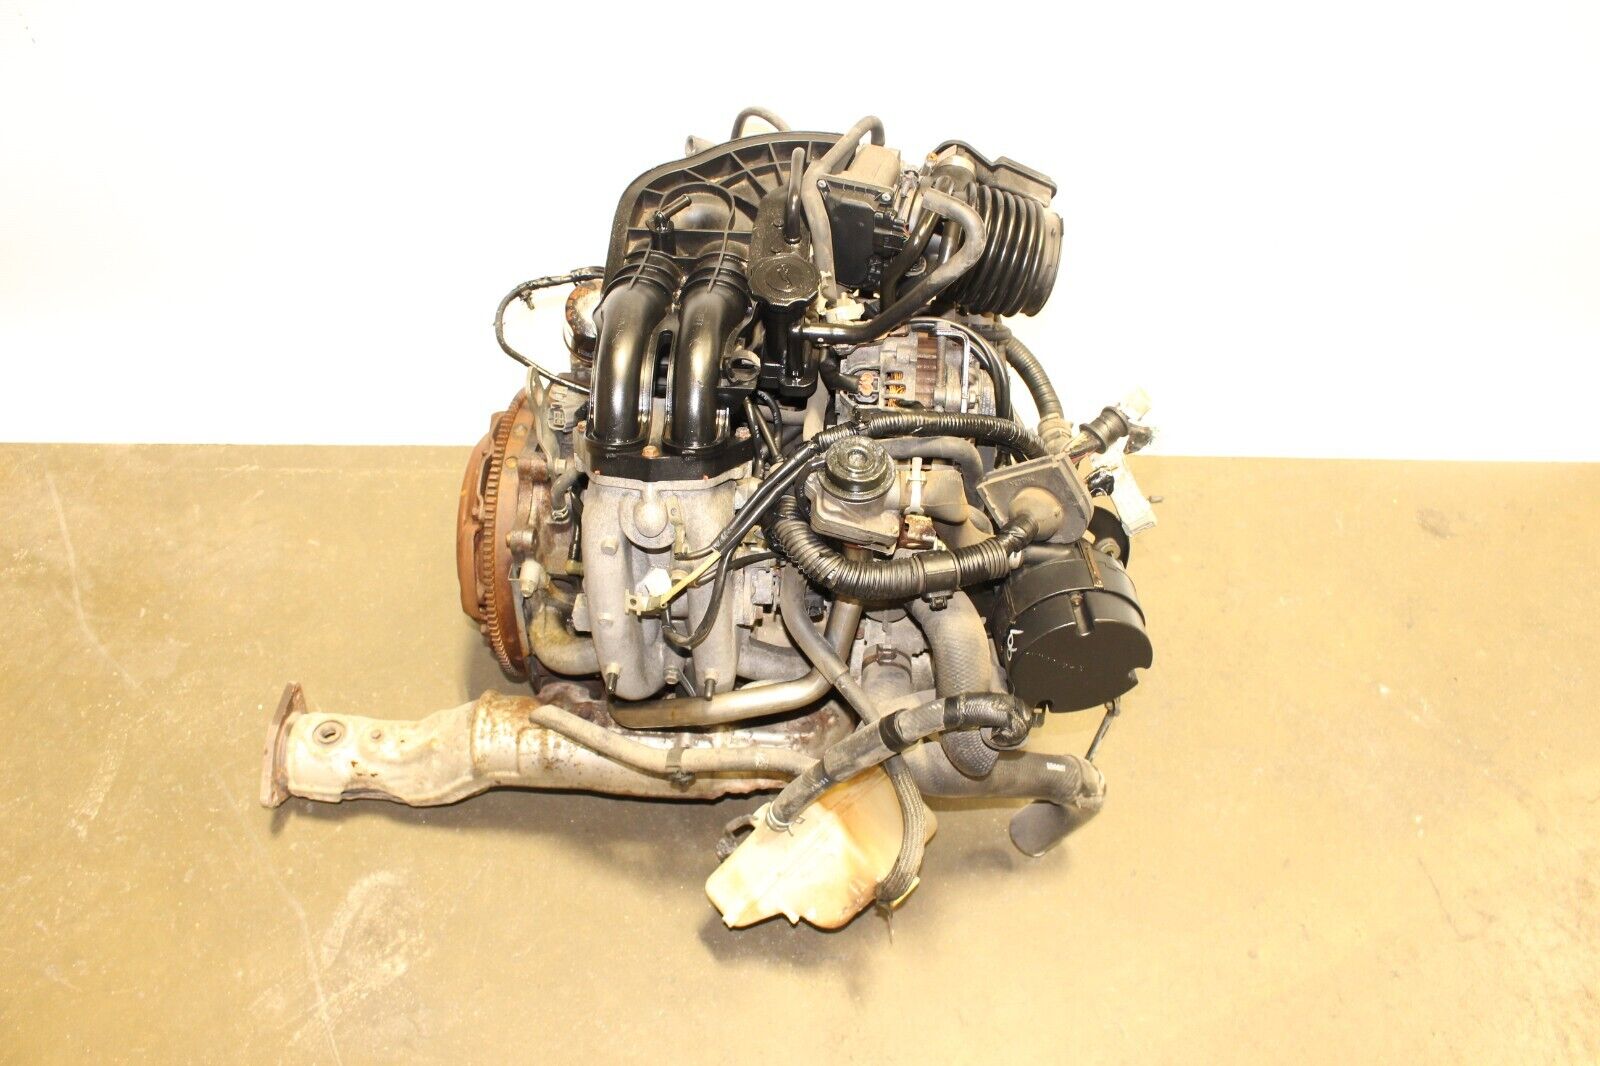 JDM MAZDA RX8 13B 4 PORT ROTARY MANUAL ENGINE